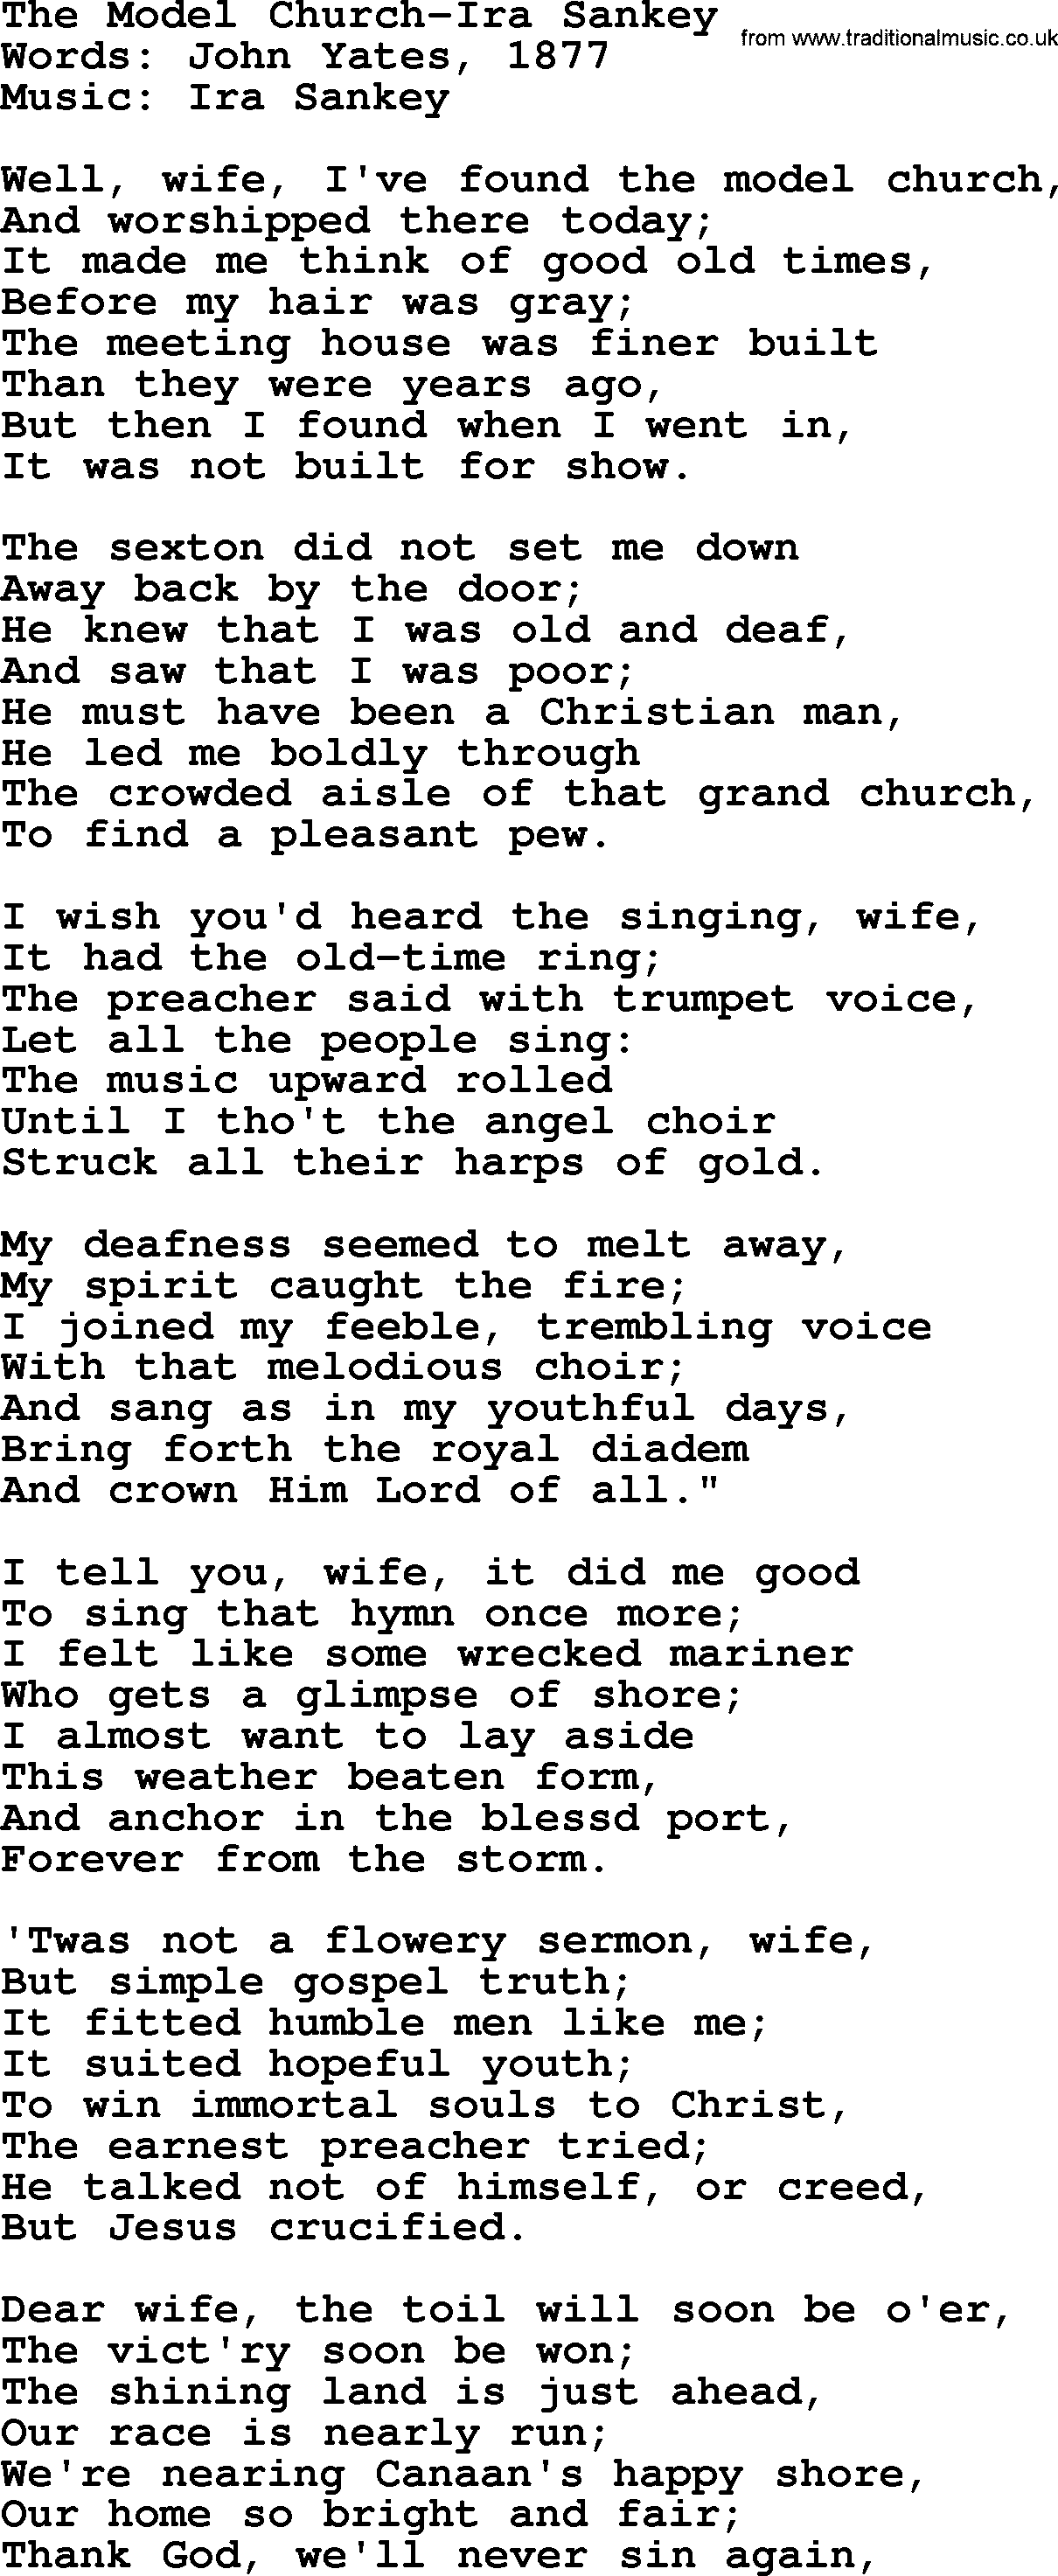 Ira Sankey hymn: The Model Church-Ira Sankey, lyrics